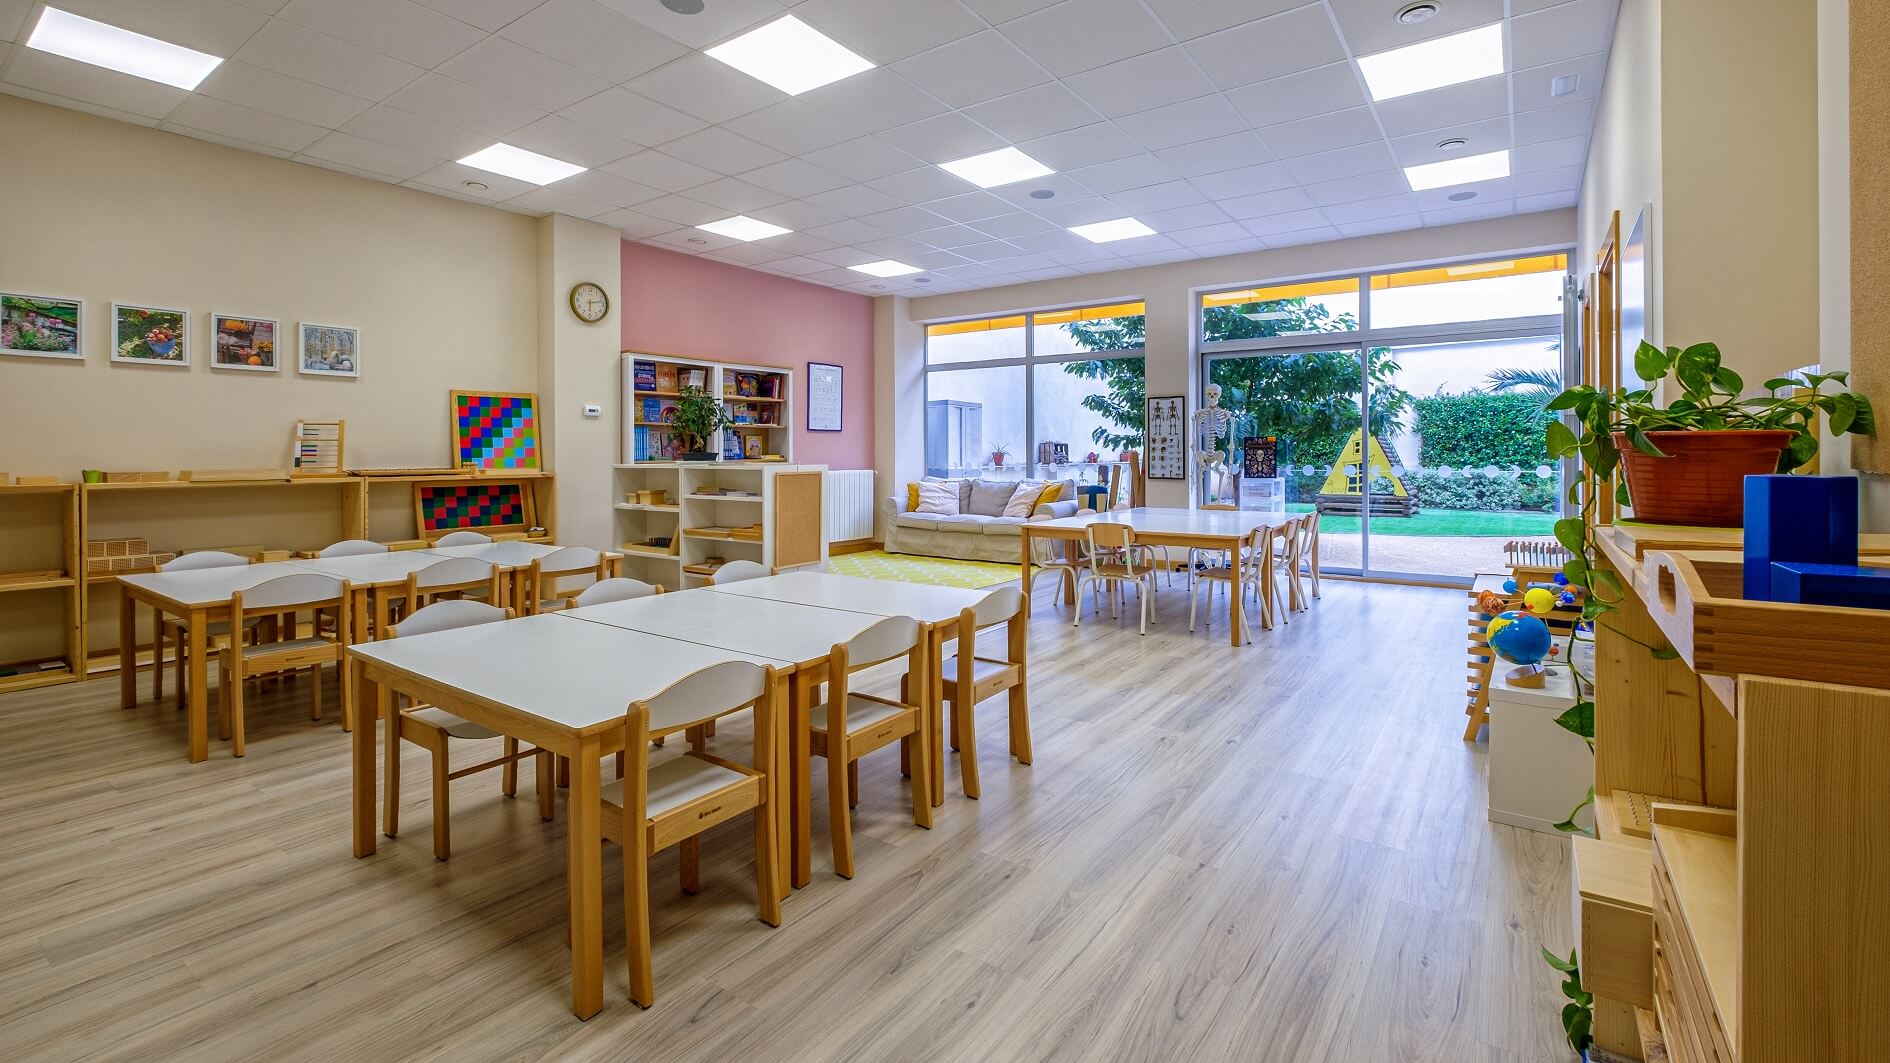 Aula Taller del colegio Montessori Cuarto Creciente